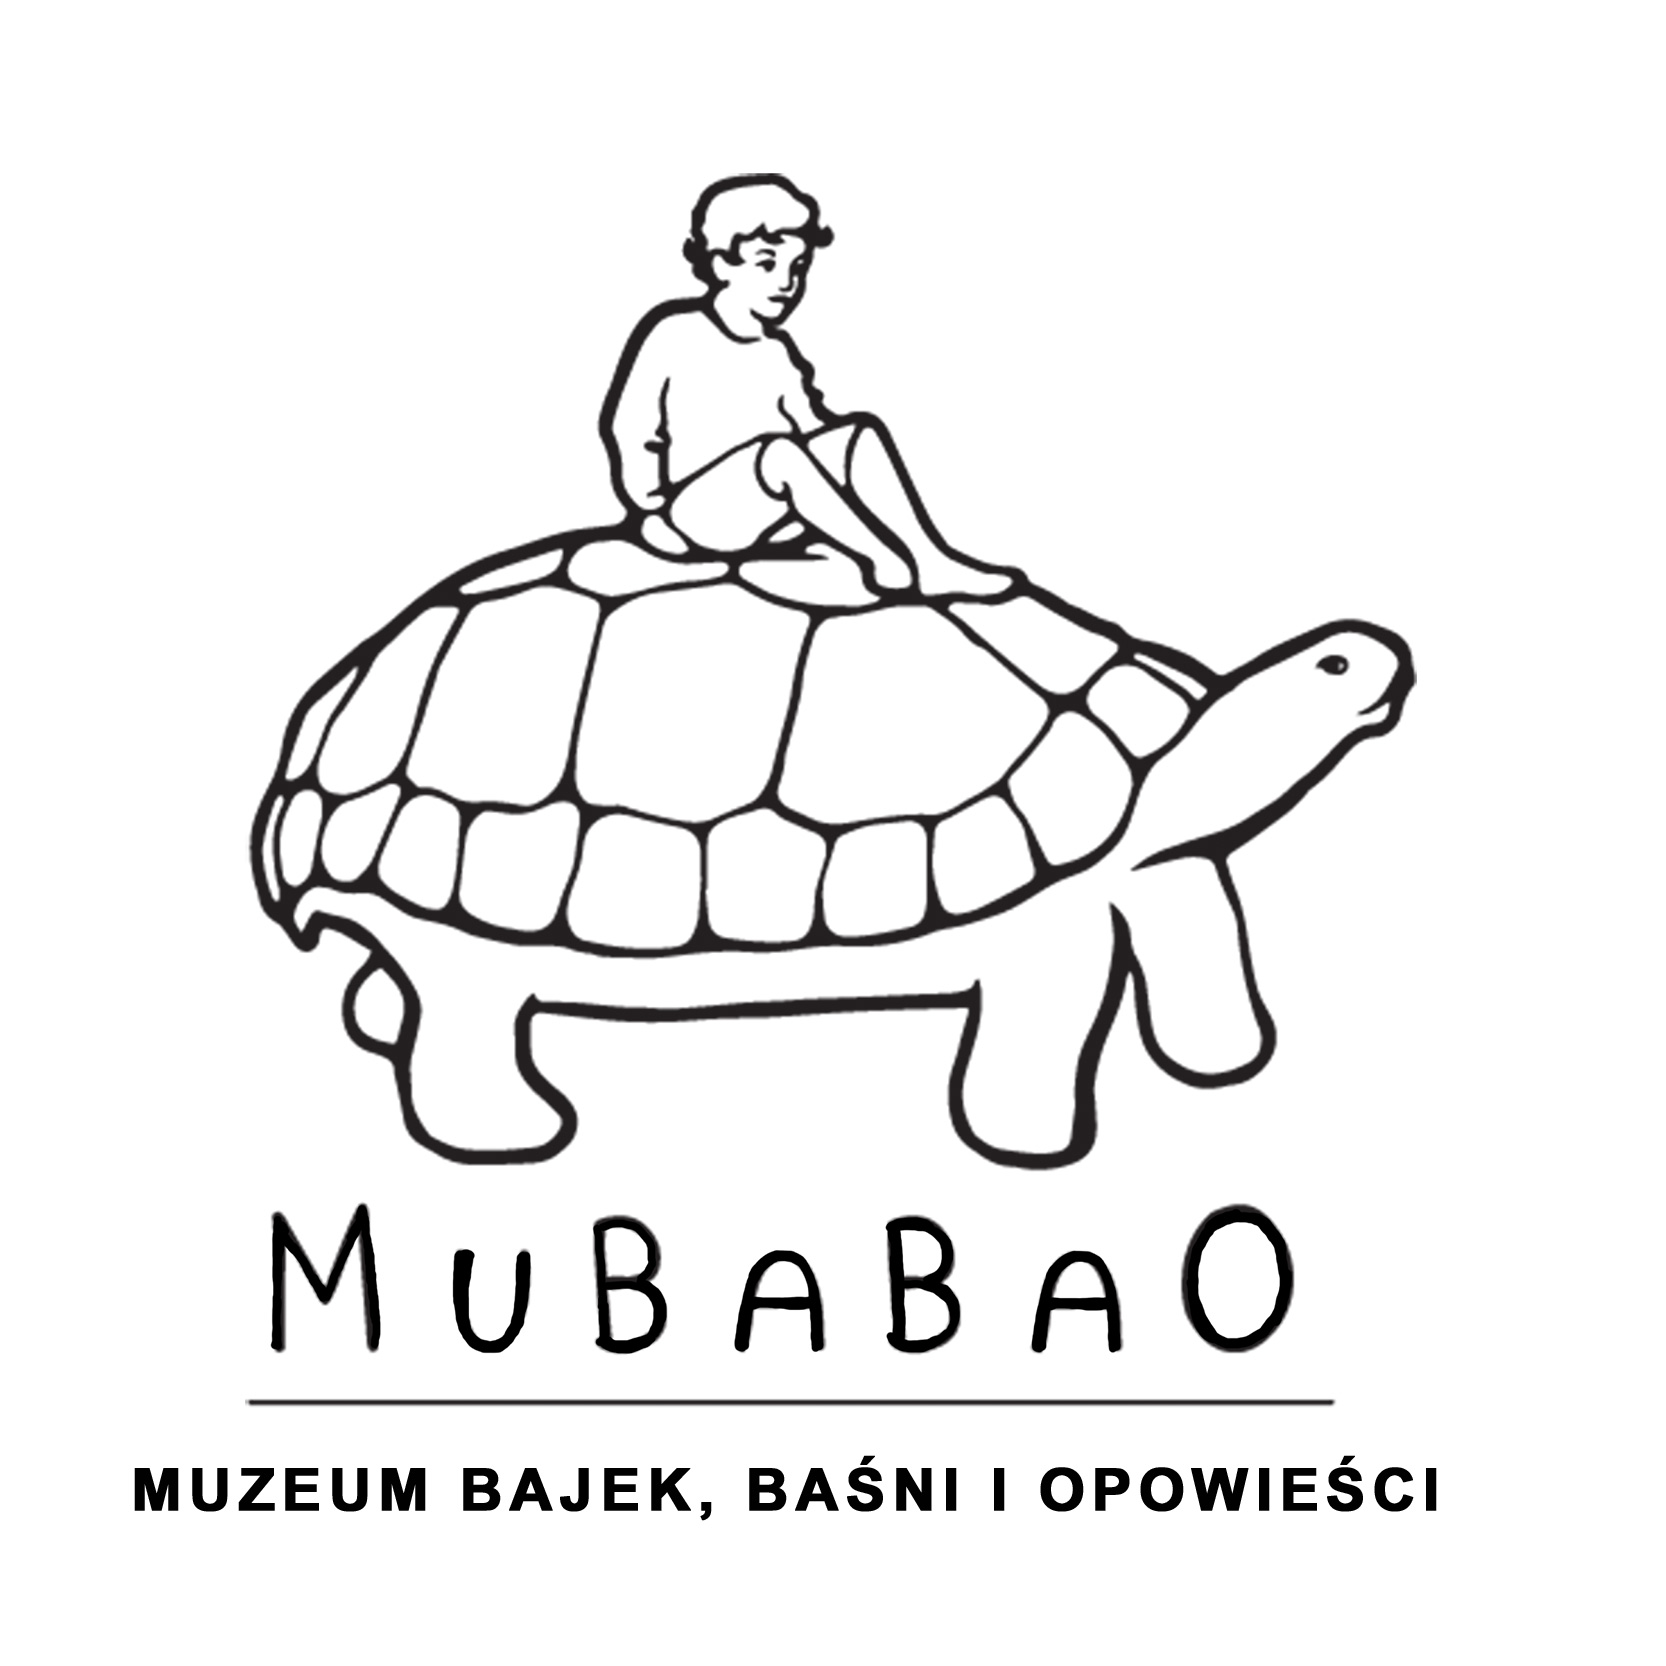 mubabao-logo-2017